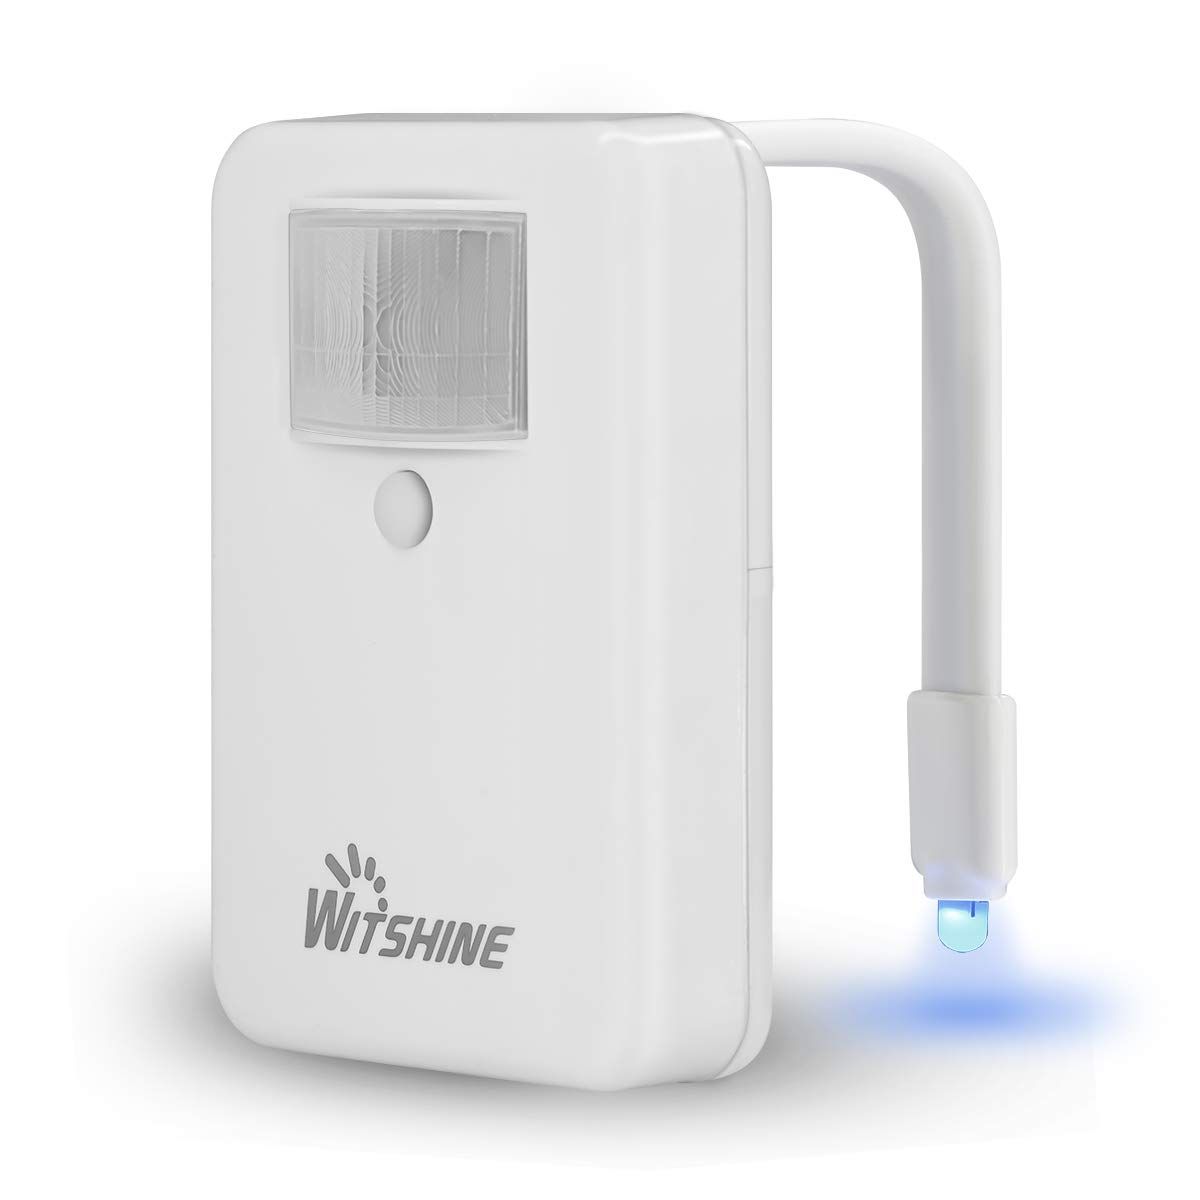 Witshine Toilet Night Light - 16 Color Motion Sensor Activated Bathroom LED Bowl Nightlight - Cool F | Amazon (US)